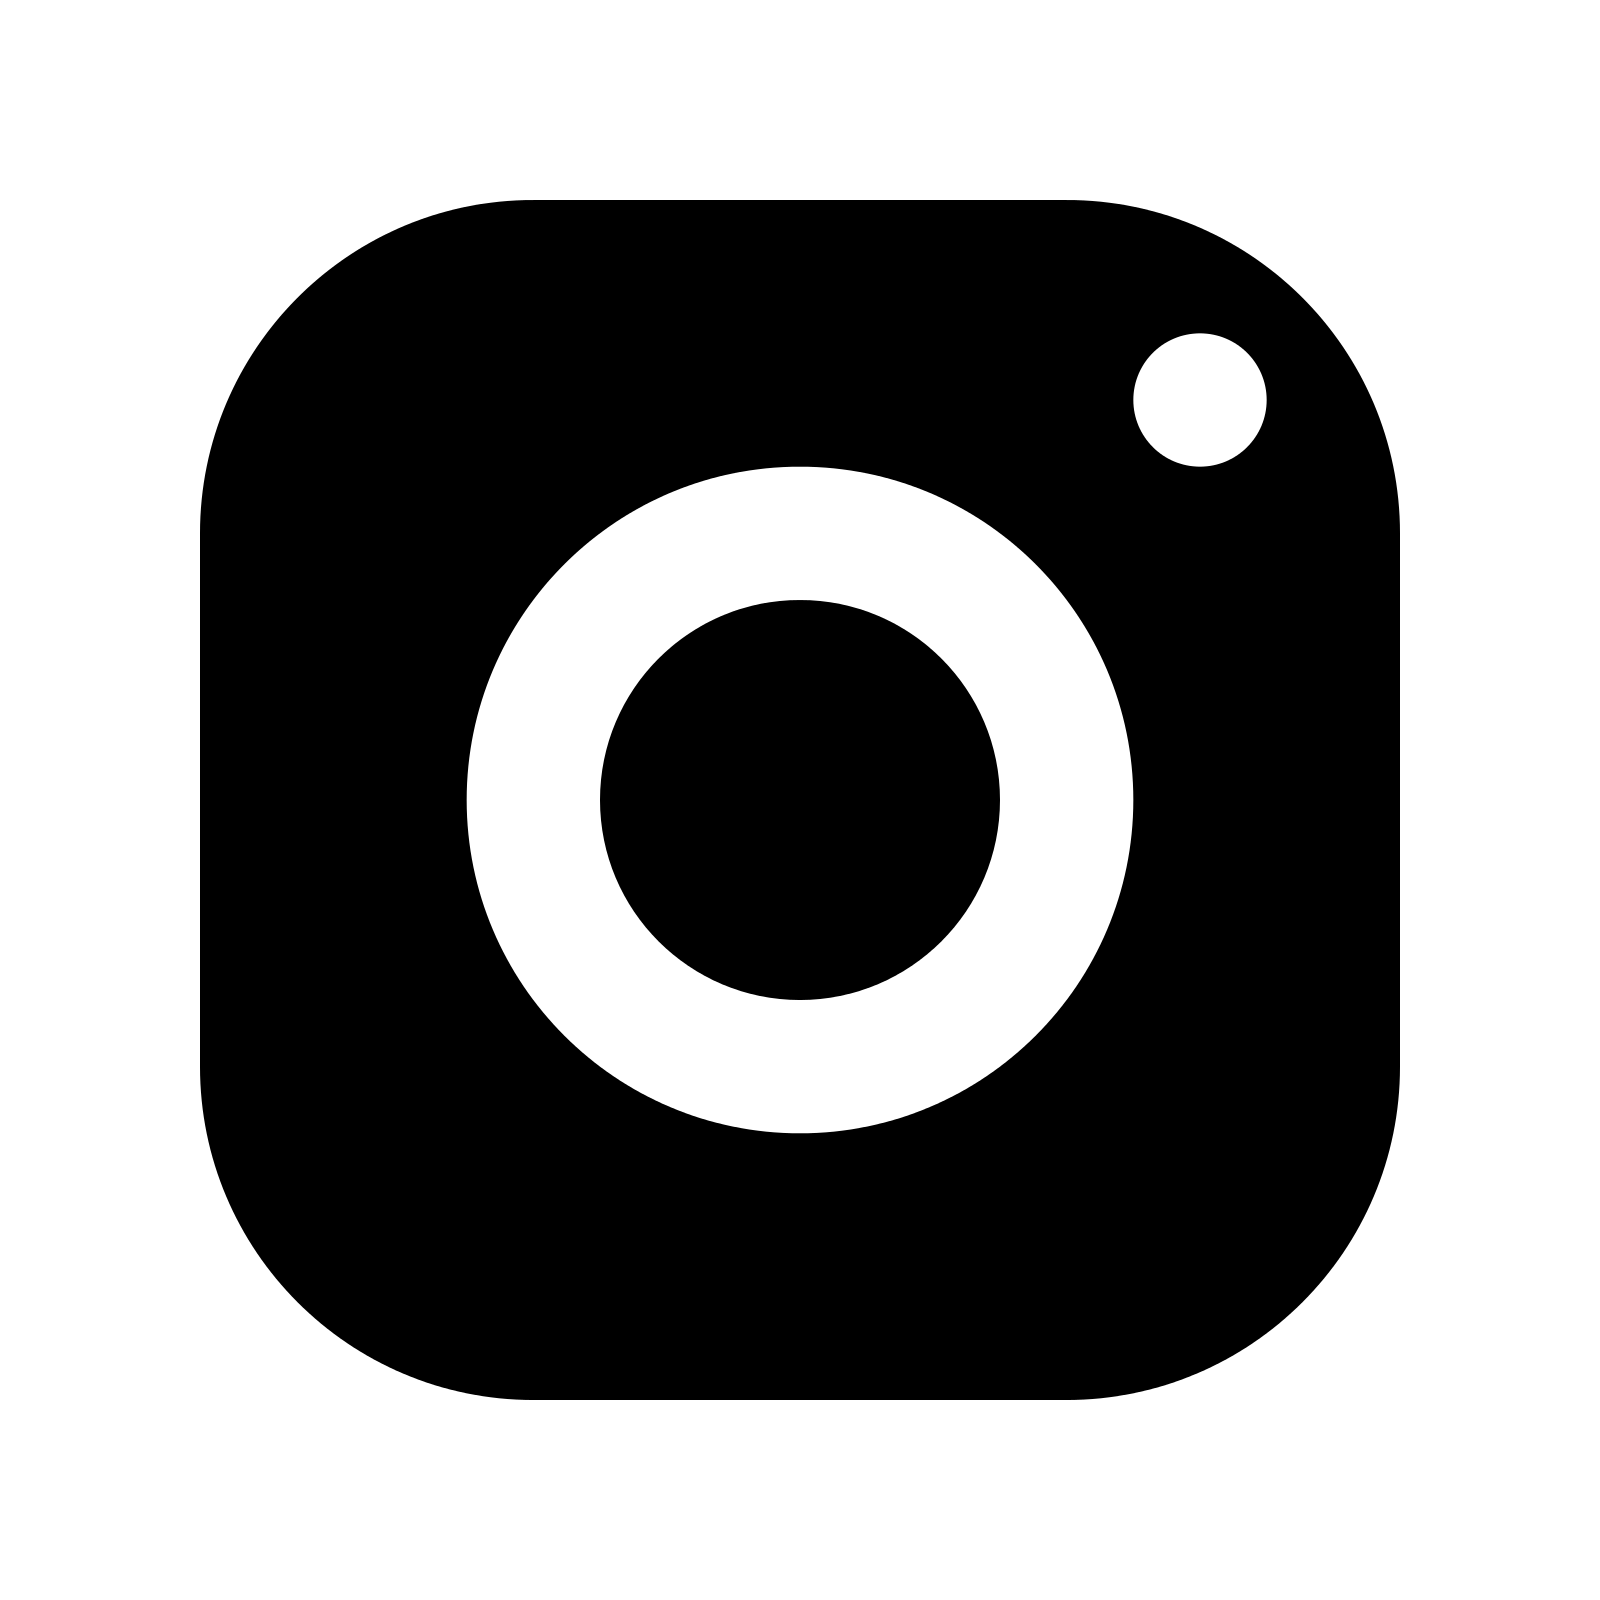 New Instagram Logo - Free New Instagram Icon 365273. Download New Instagram Icon